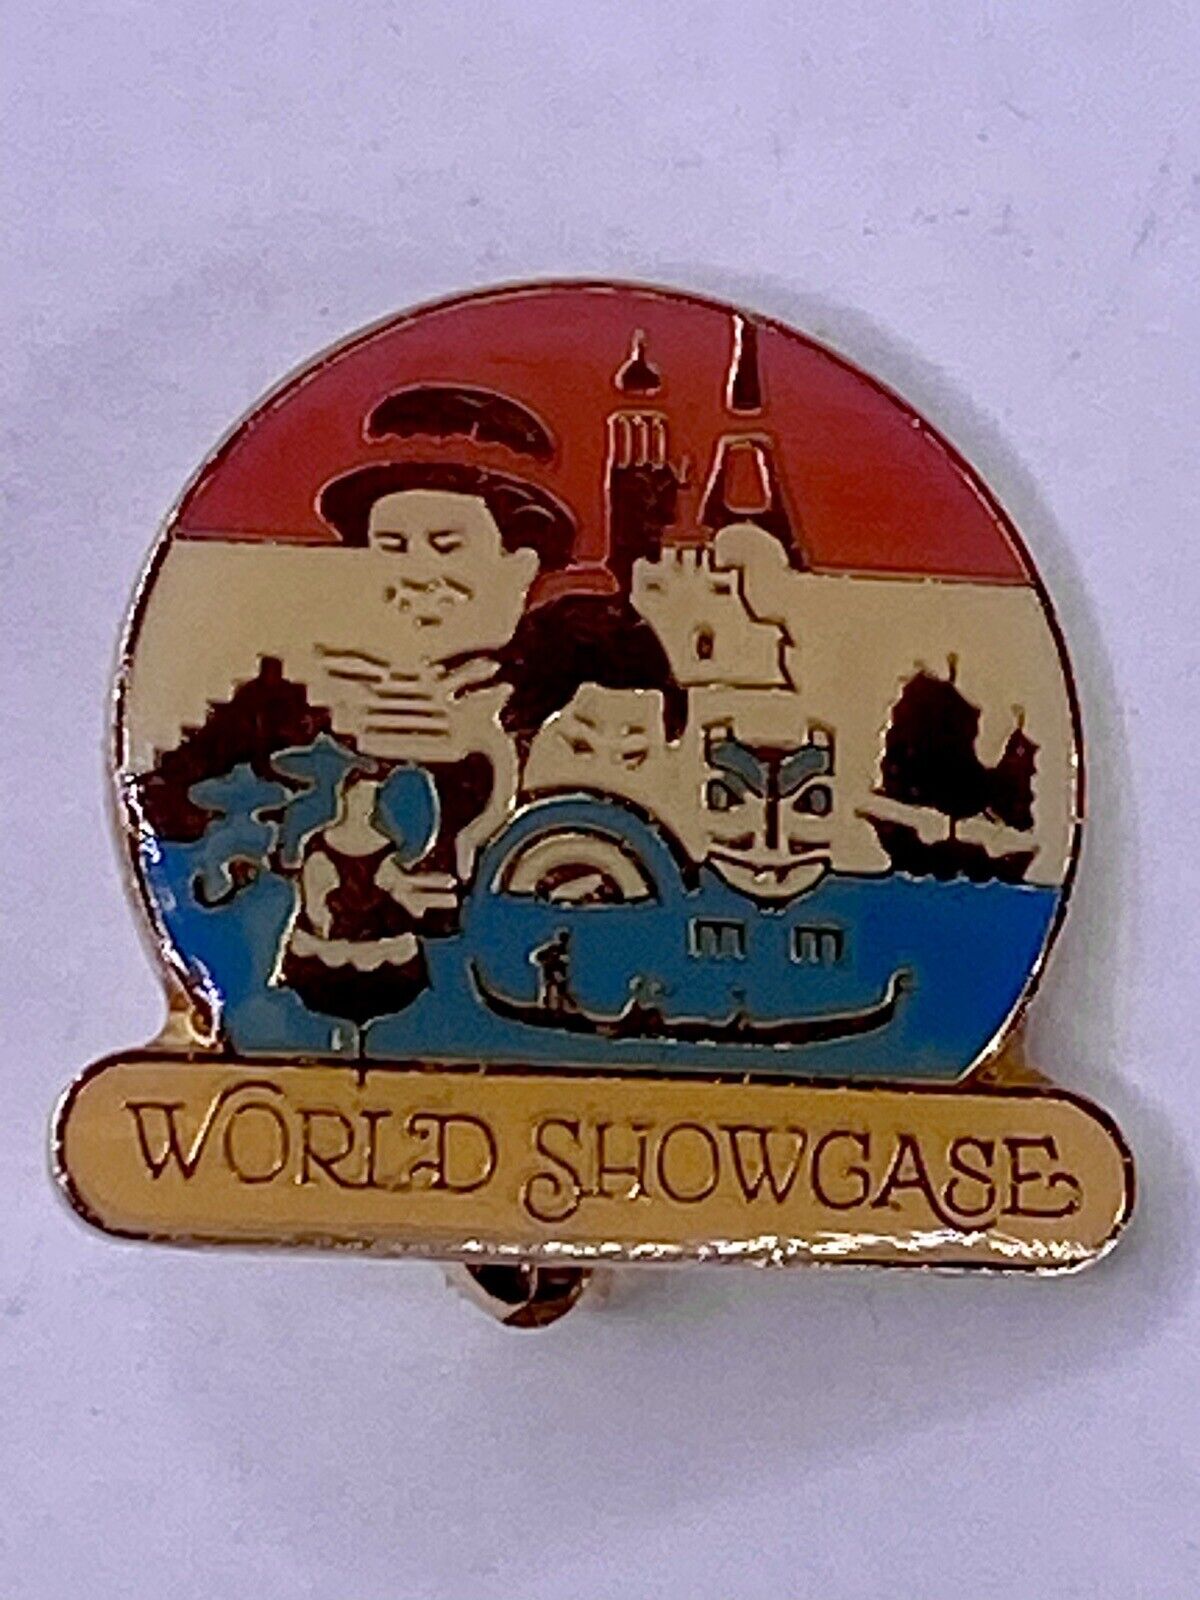 Vintage 80s Epcot / Walt Disney World Showcase Pin Brooch Collectible